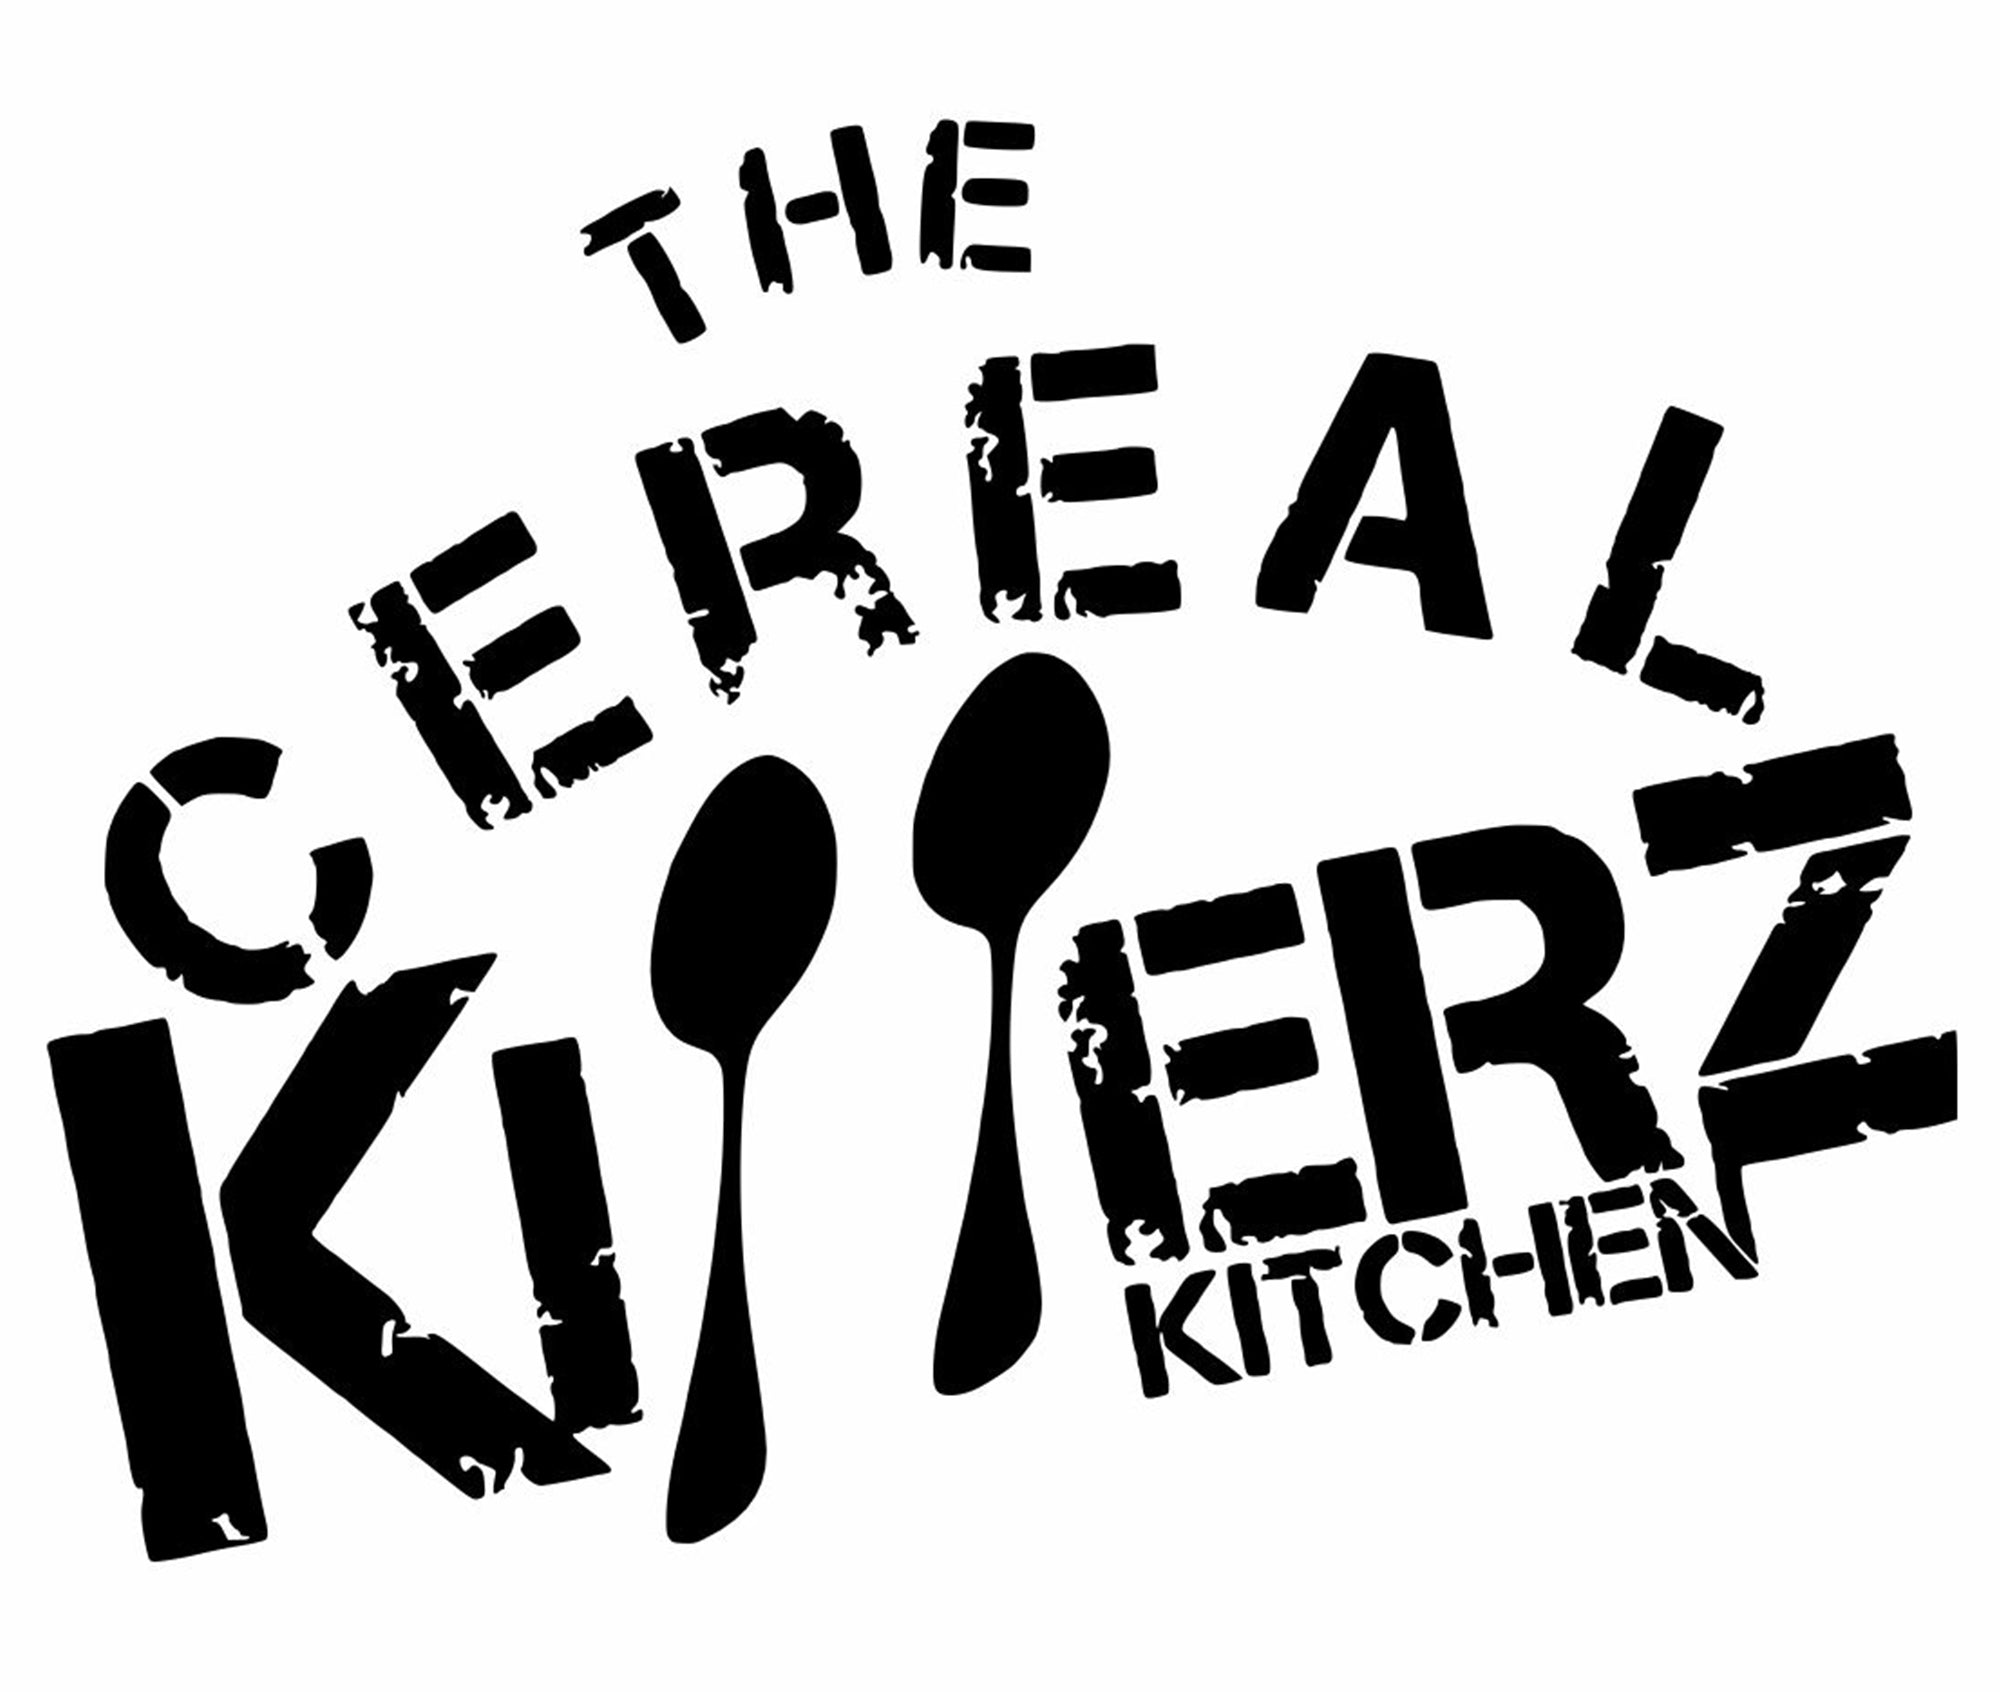 total cereal logo